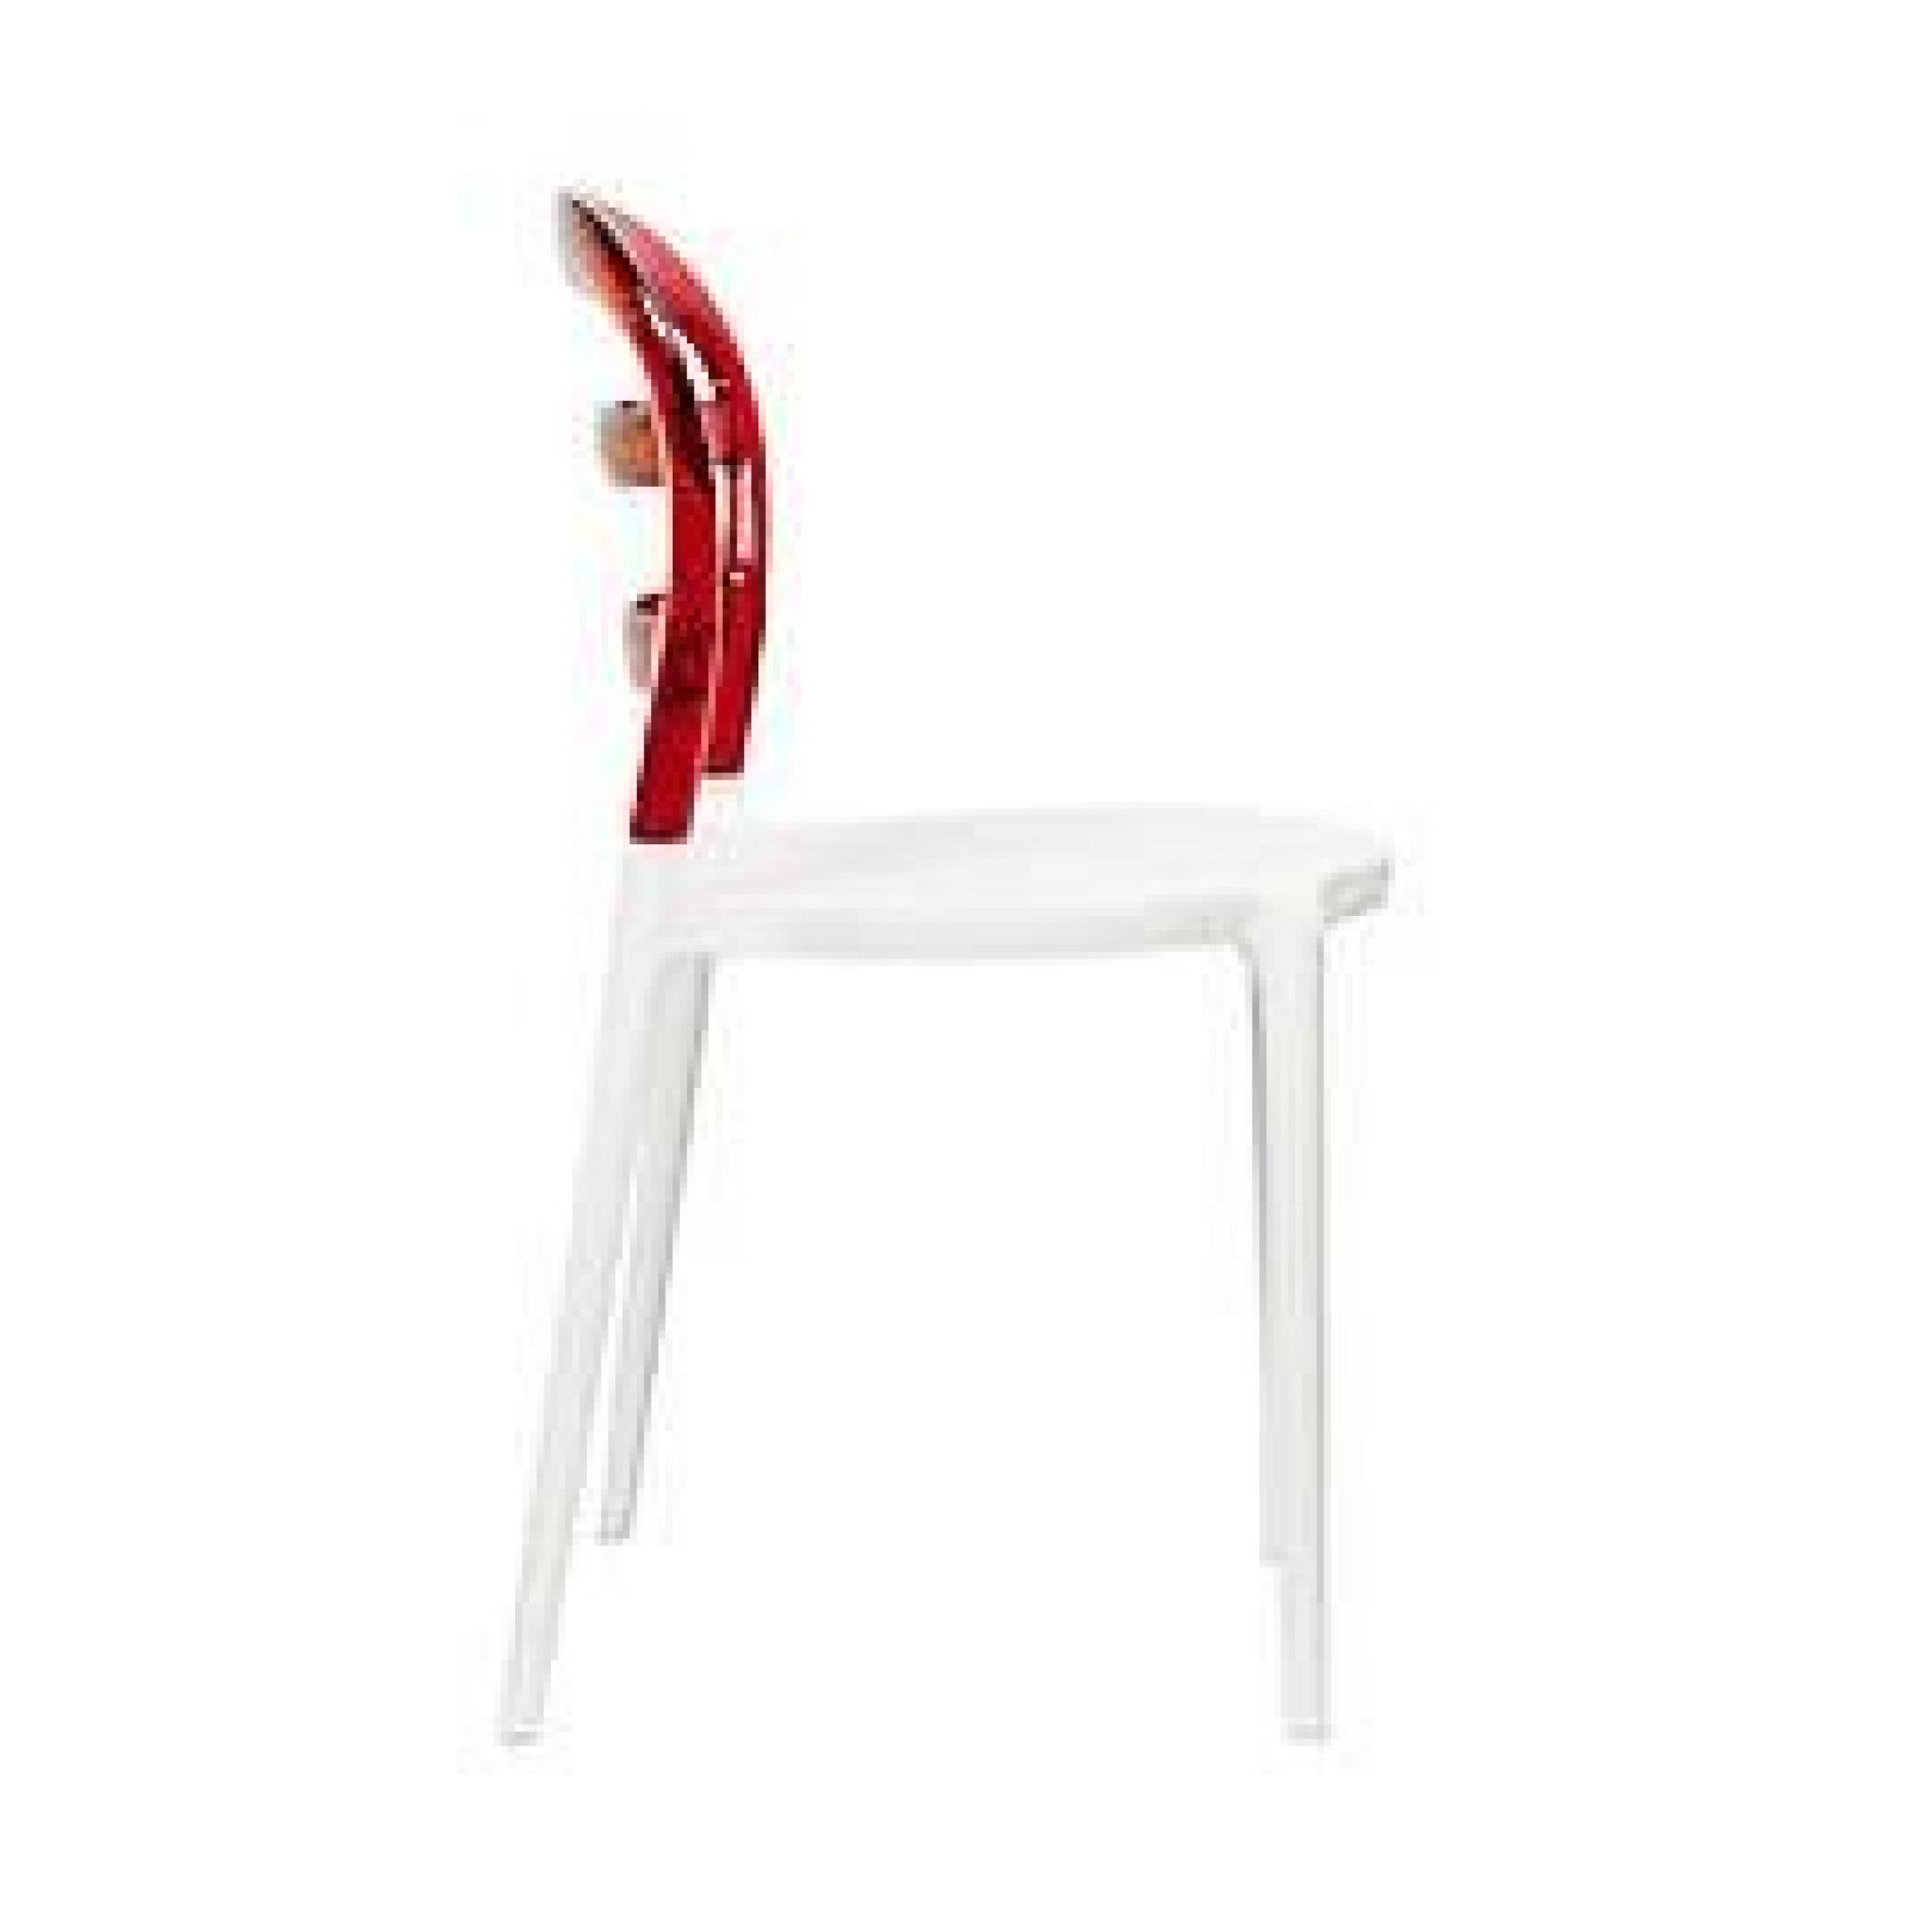 NEO - Chaise en polypropylene rouge transparent